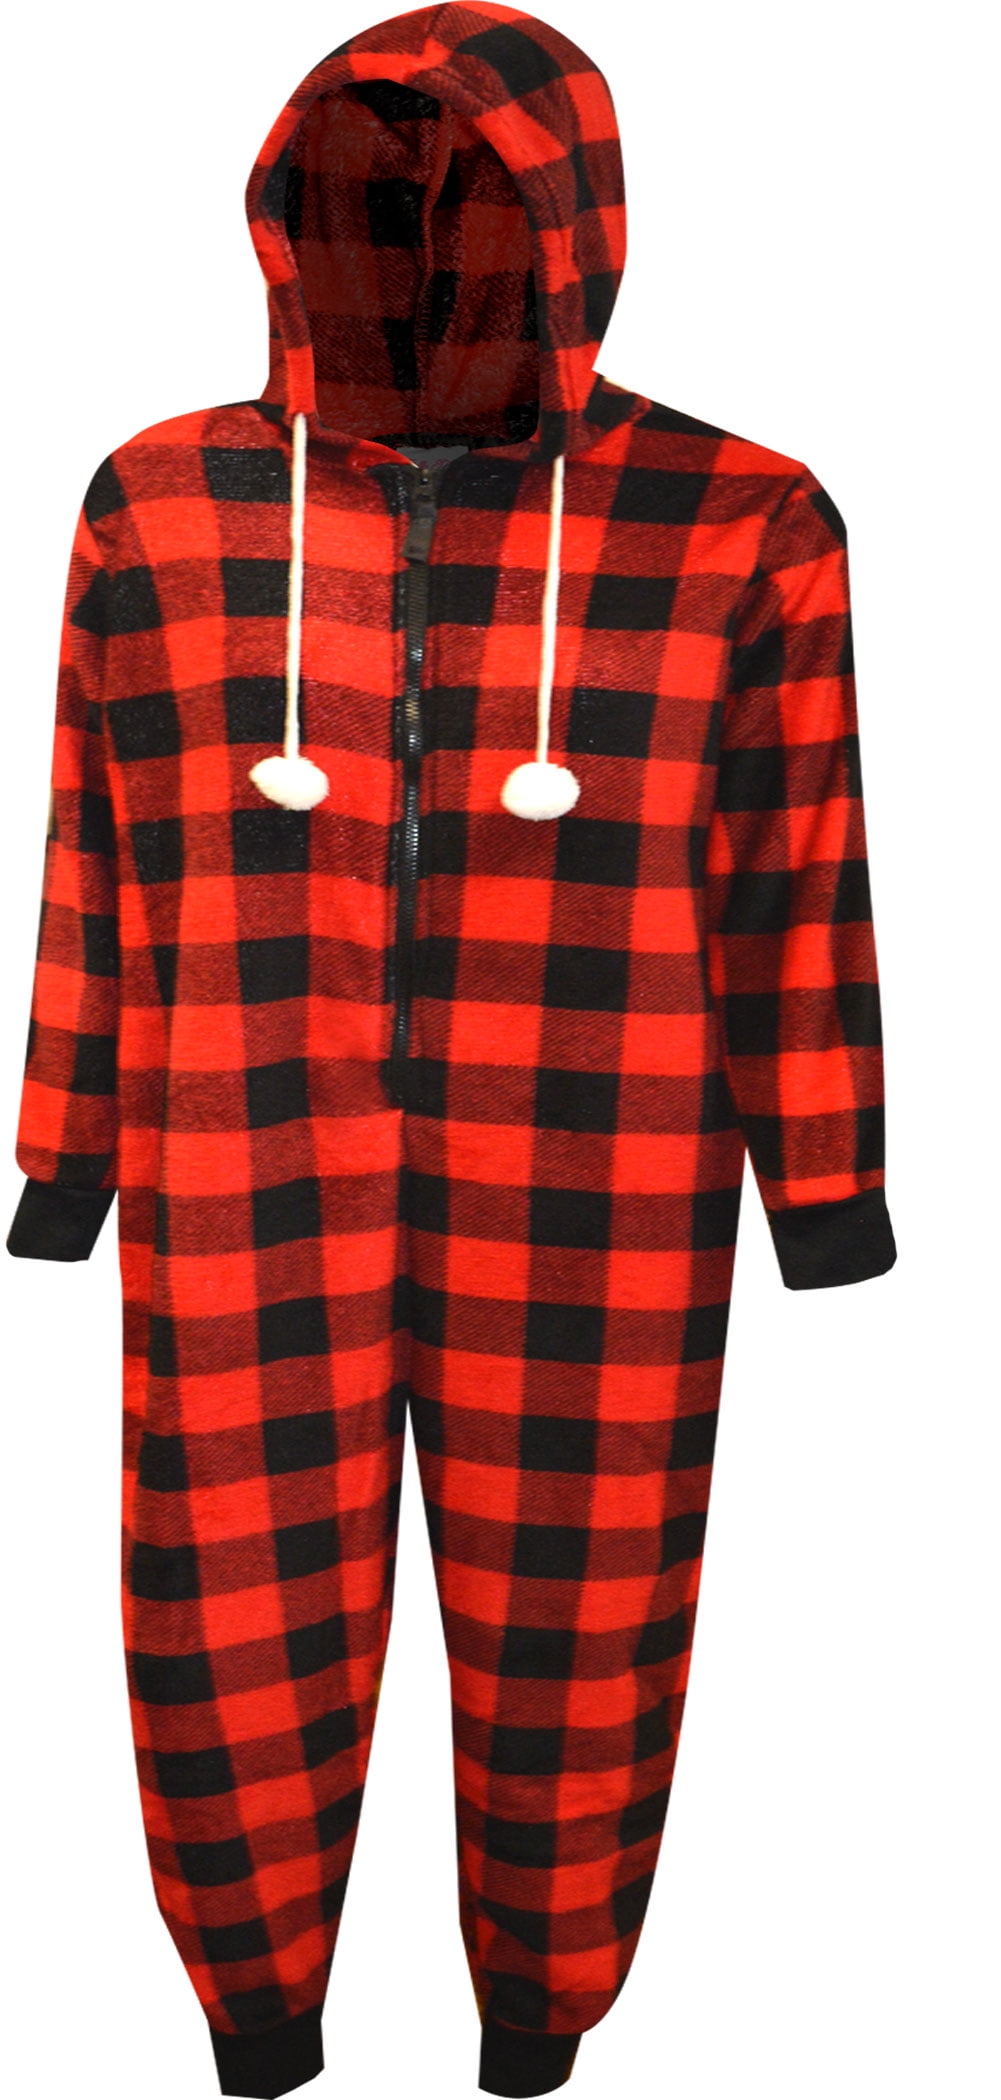 Just Love Buffalo Plaid Adult Onesie Sherpa Lined Hoody One Piece Pajamas 